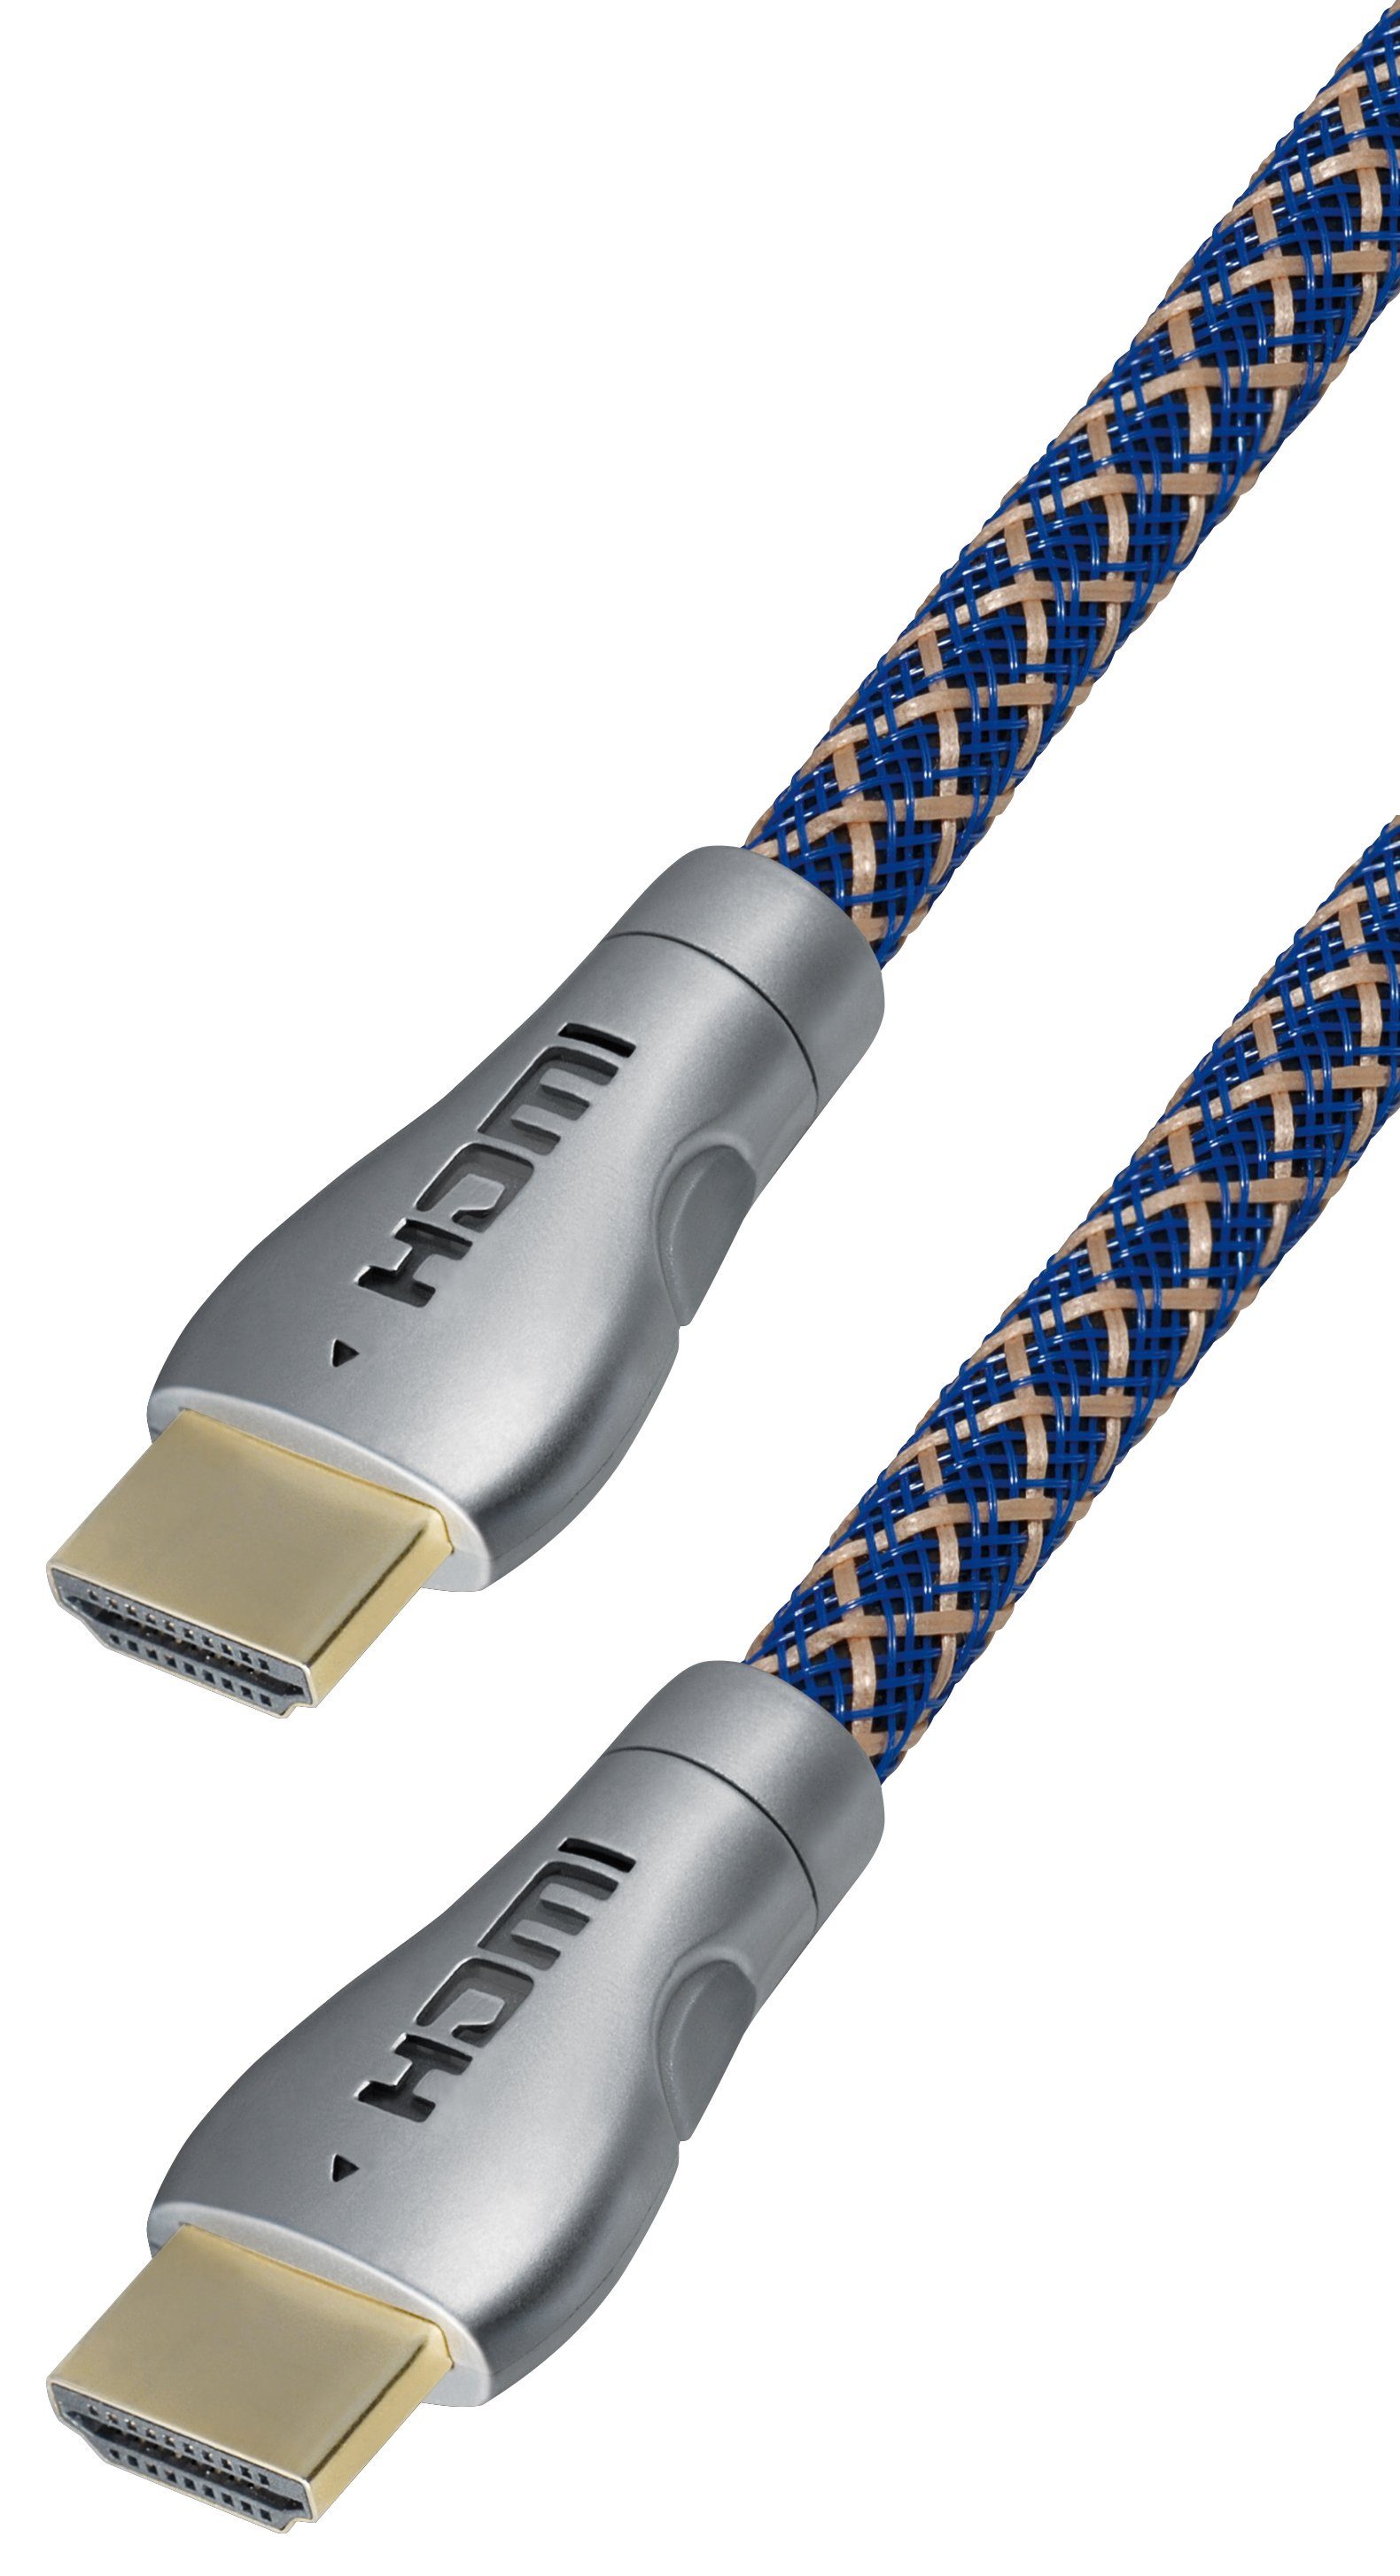 Maxtrack HDMI-Kabel, HDMI, HDMI auf HDMI (50 cm), HDMI-Kabel New Style Line, LED Stecker, UHD, 4k, 3D